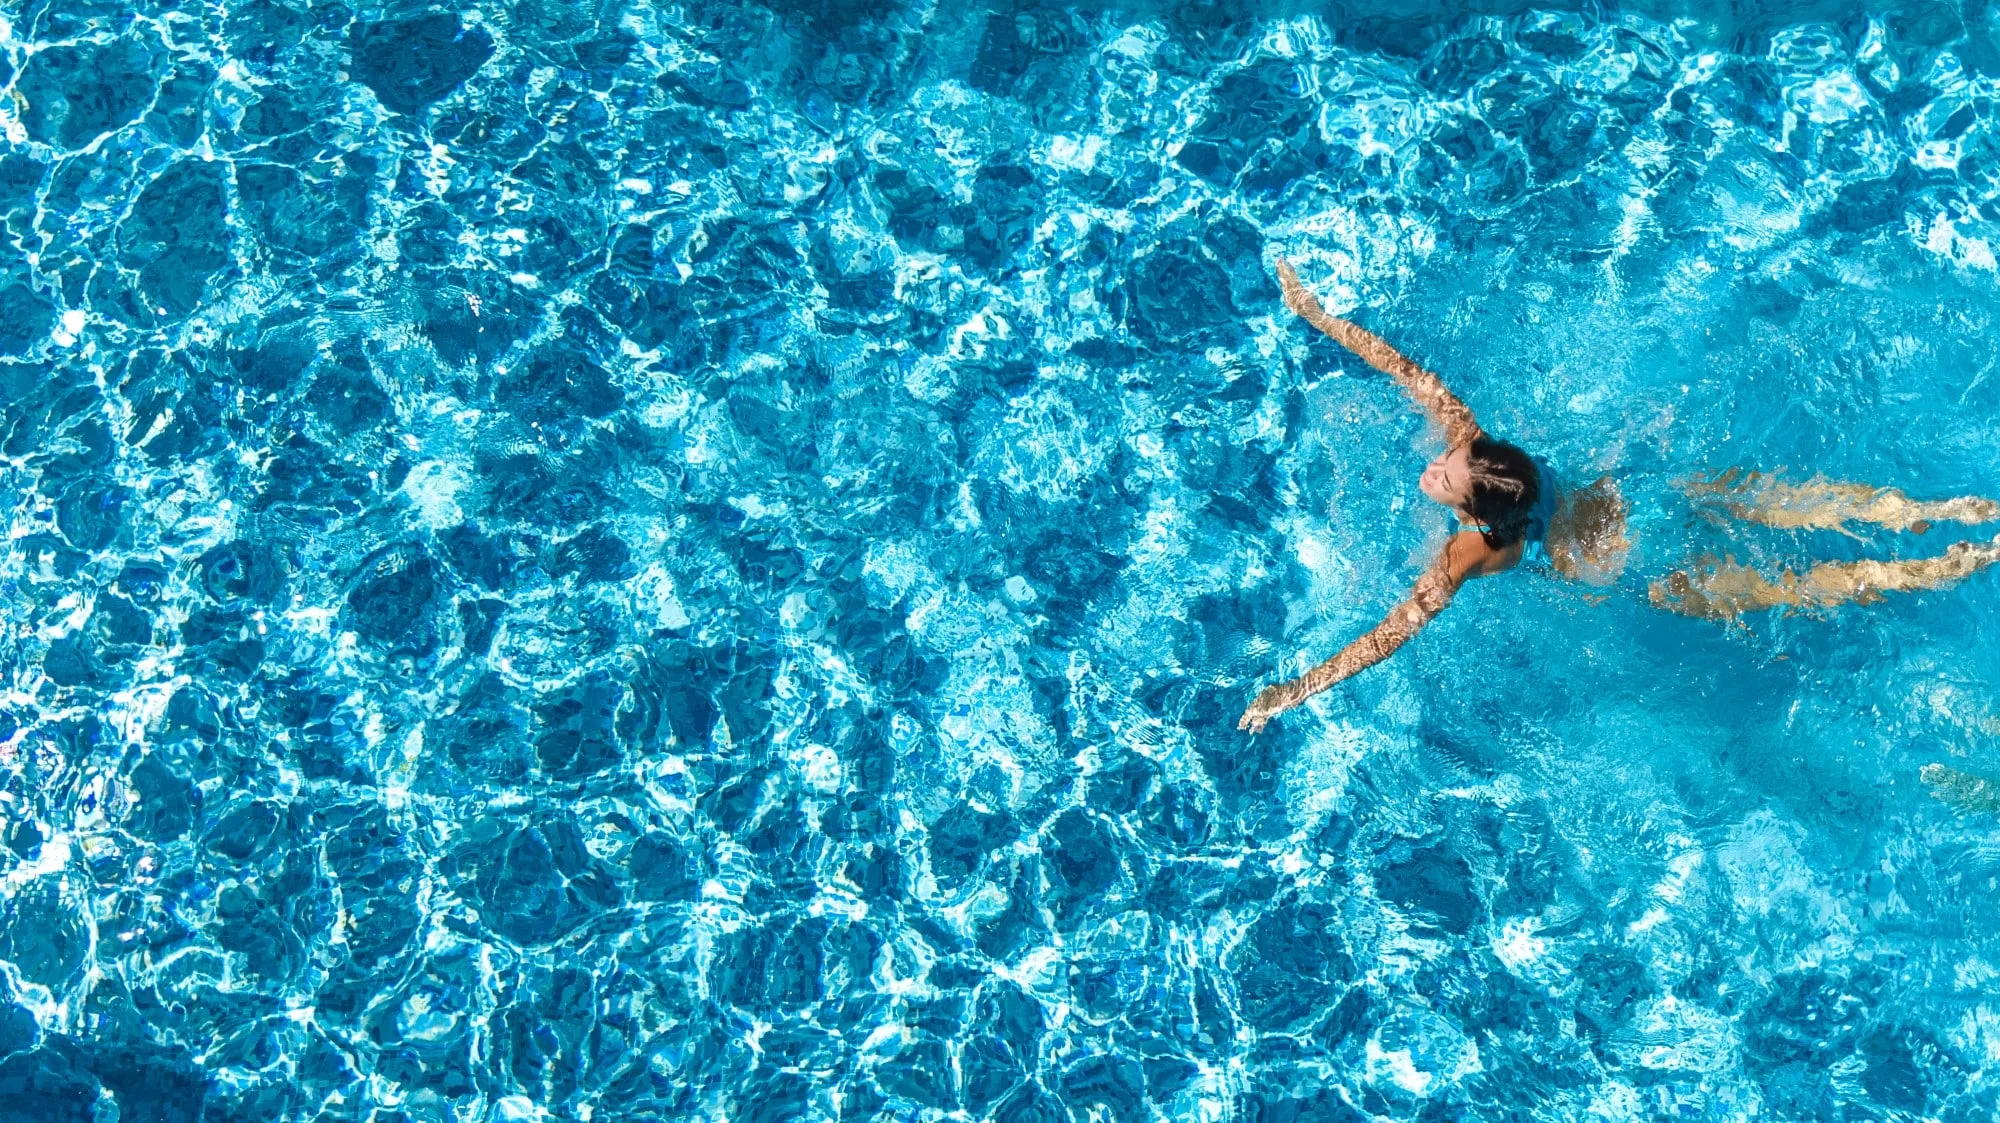 Woman in blue bikini swimming in a pool aerial view photo. She has long brown hair and fair skin.